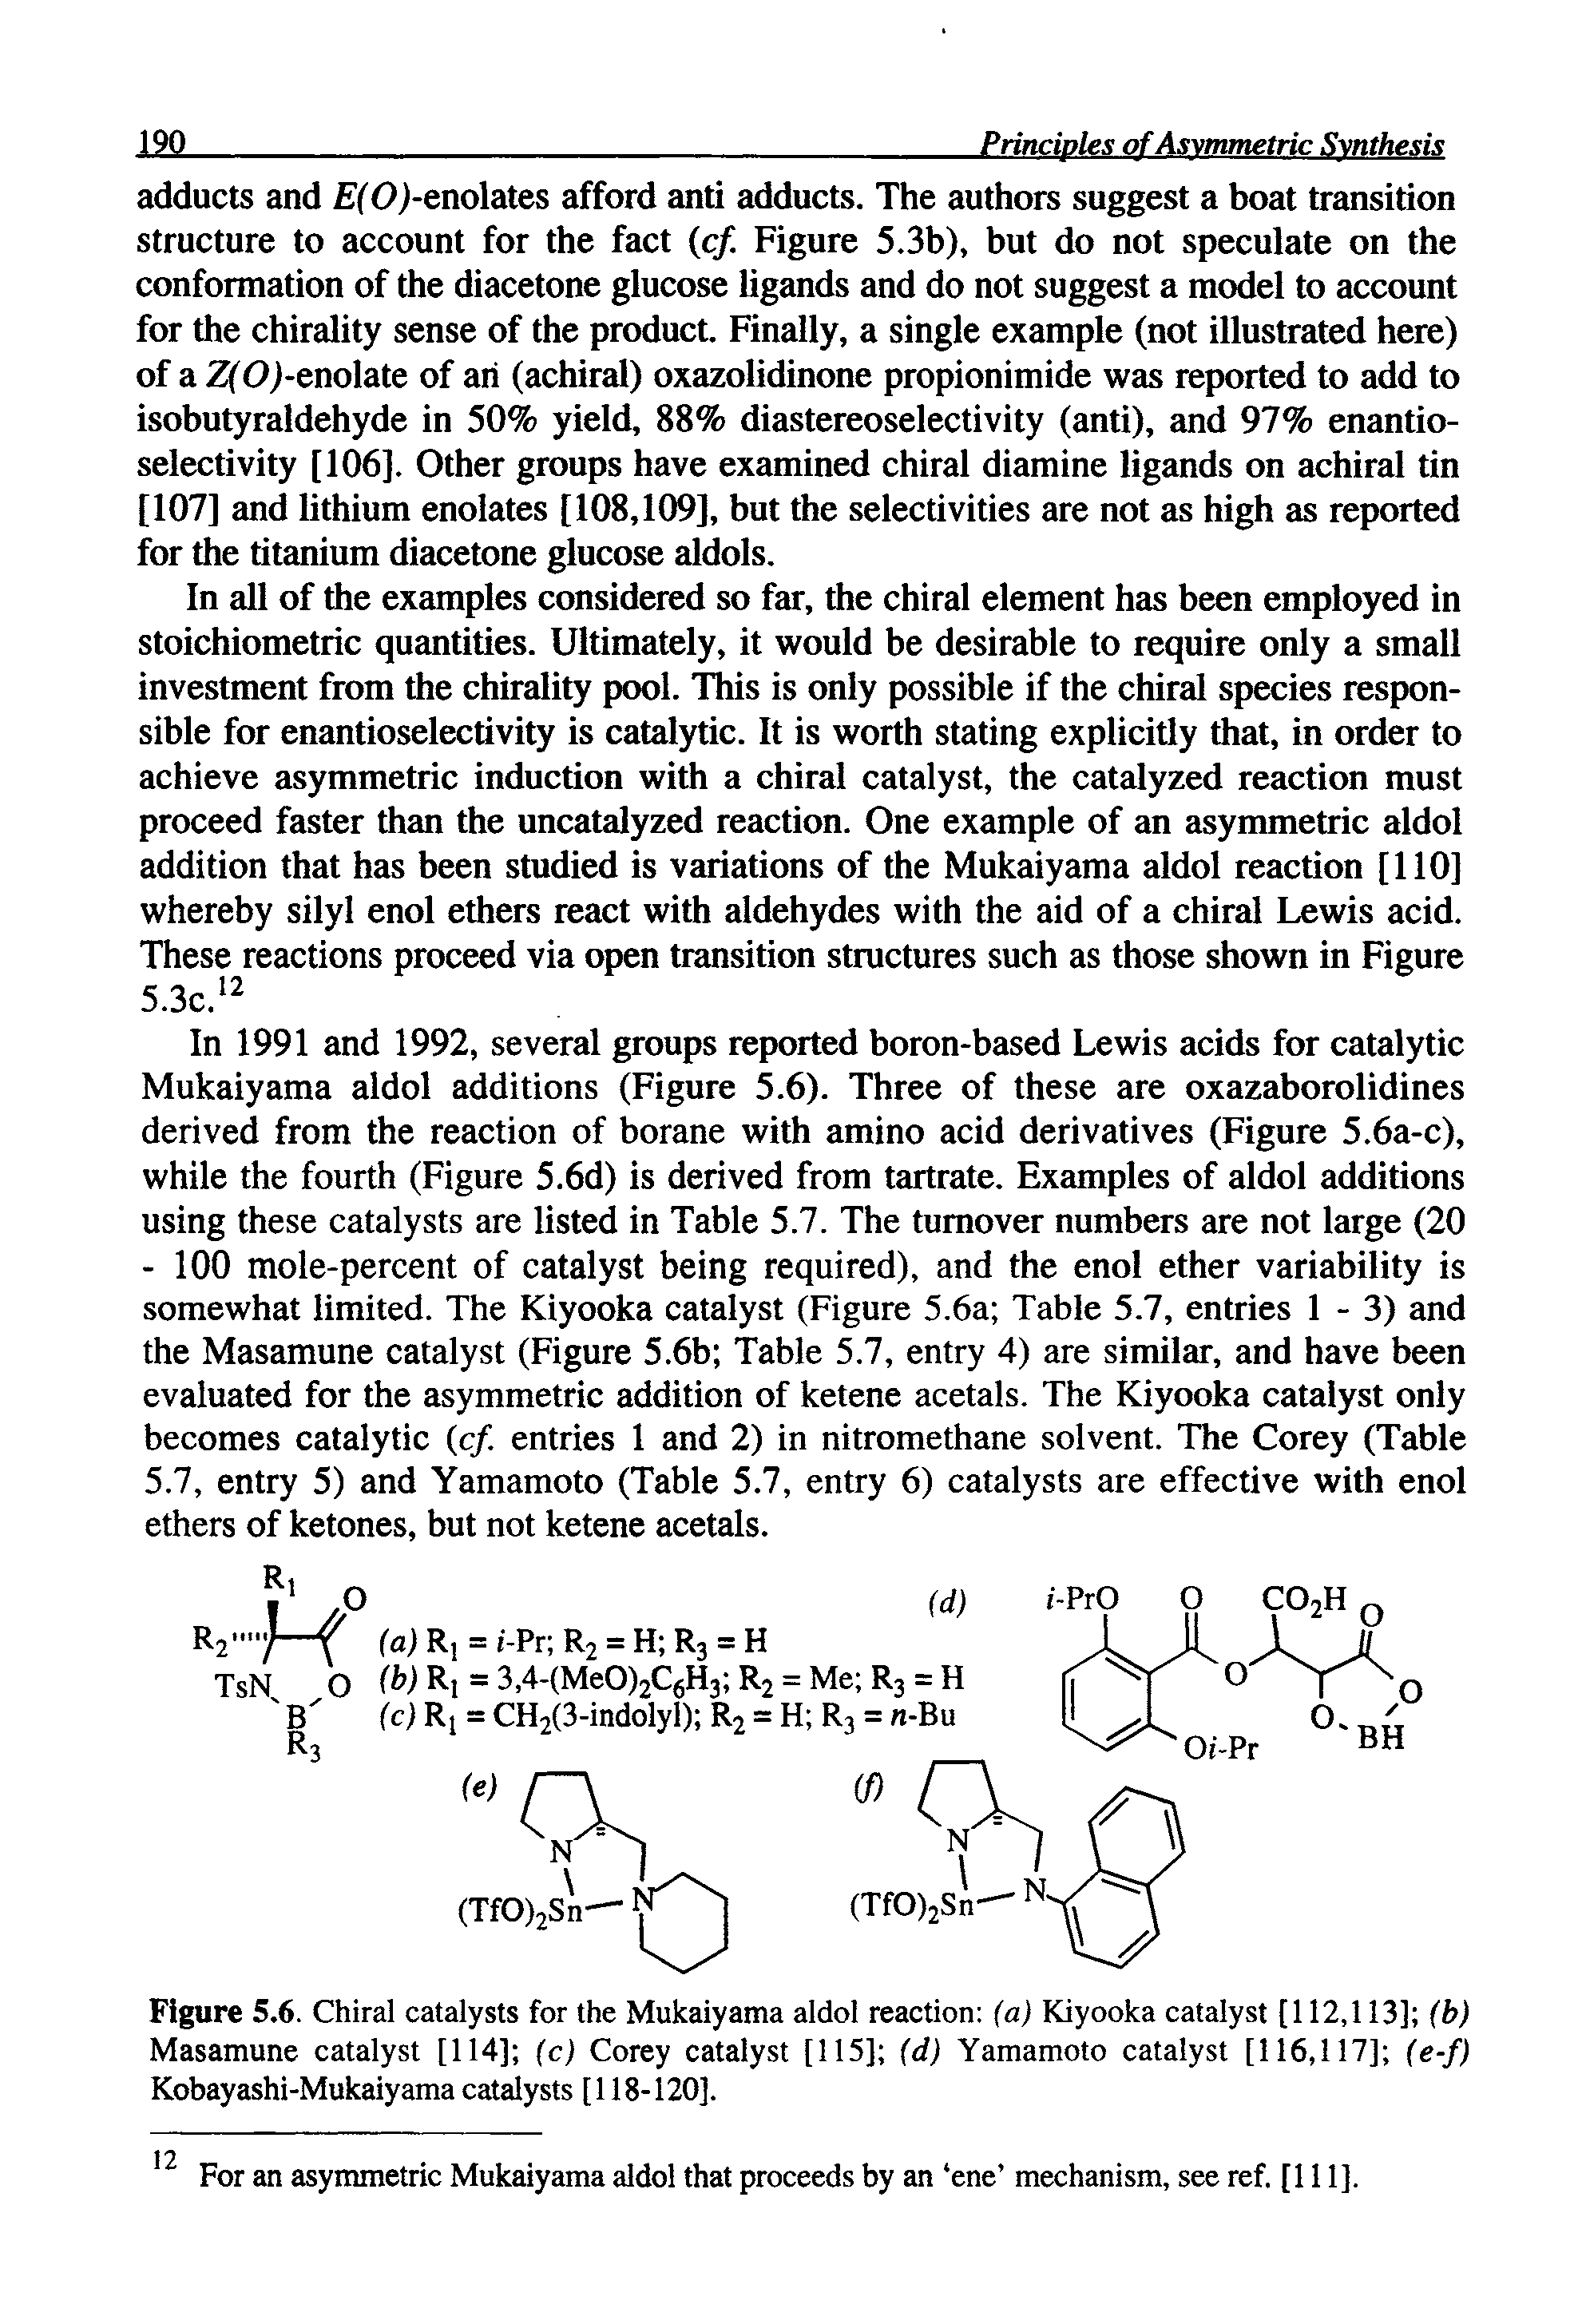 Figure 5.6. Chiral catalysts for the Mukaiyama aldol reaction (a) Kiyooka catalyst [112,113] (b) Masamune catalyst [114] (c) Corey catalyst [115] (d) Yamamoto catalyst [116,117] (e-f) Kobayashi-Mukaiyama catalysts [118-120].